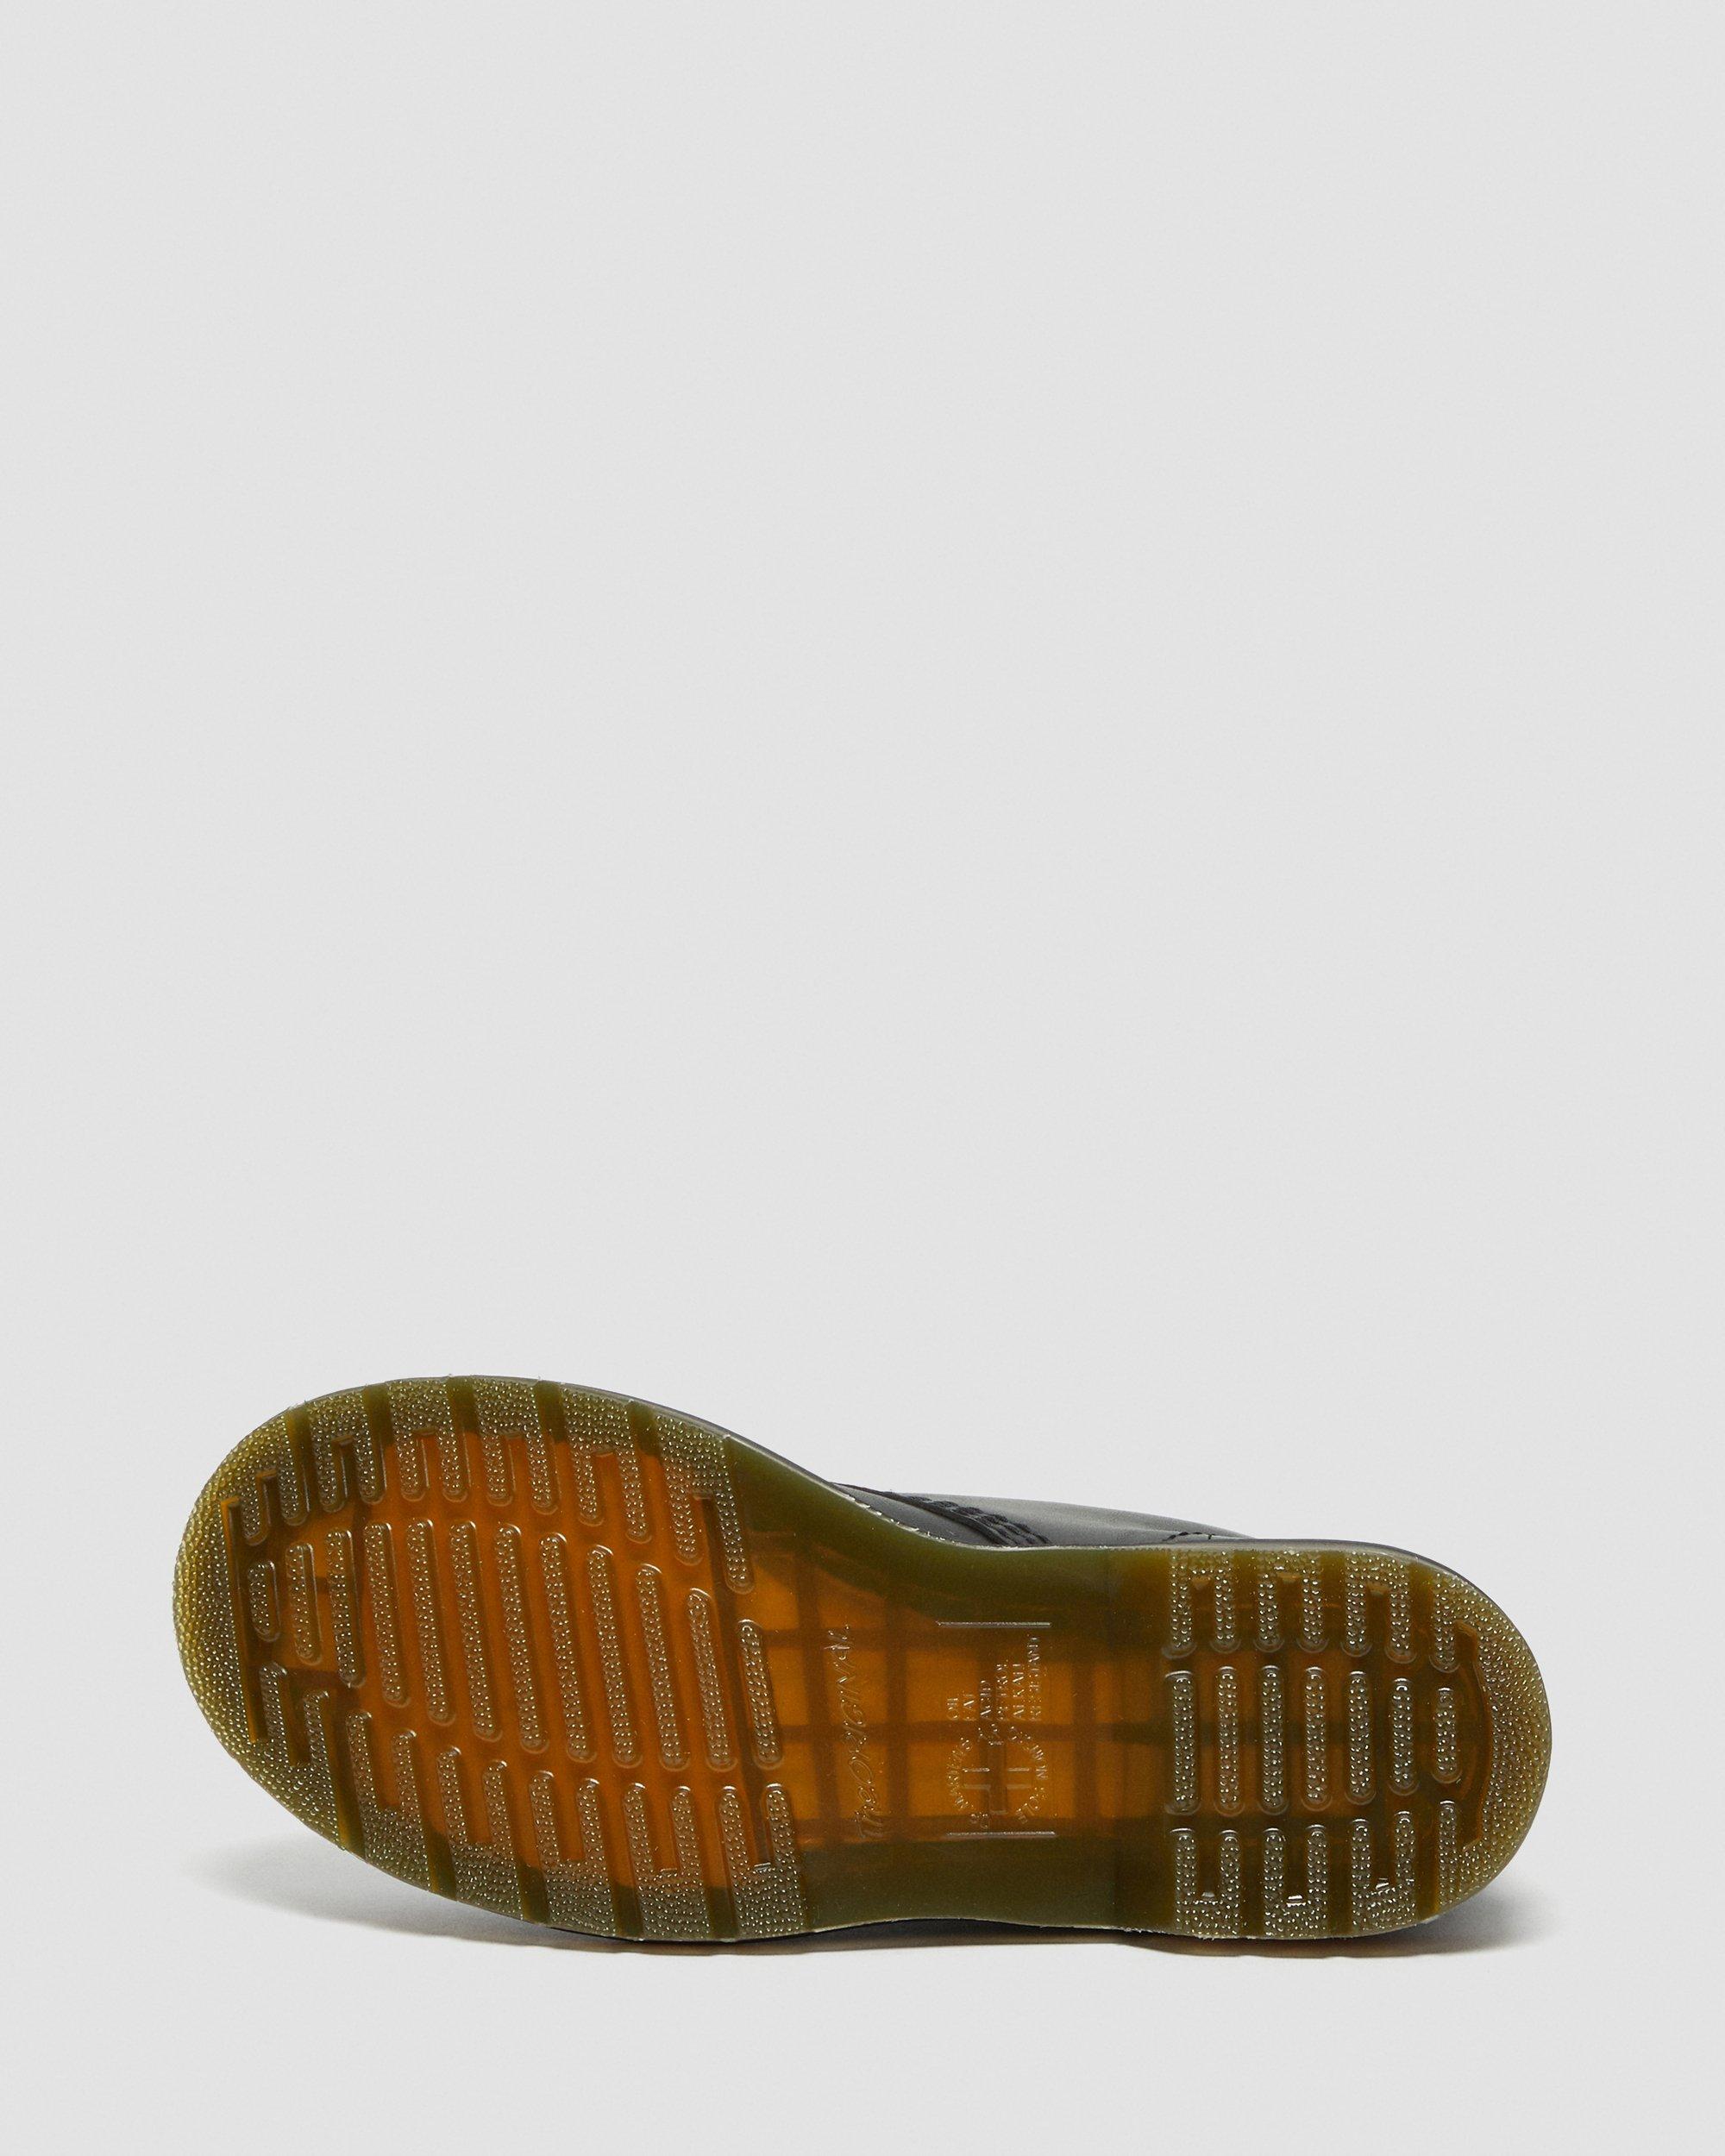 1460 Pascal Women's Wanama Leather Boots, Black | Dr. Martens